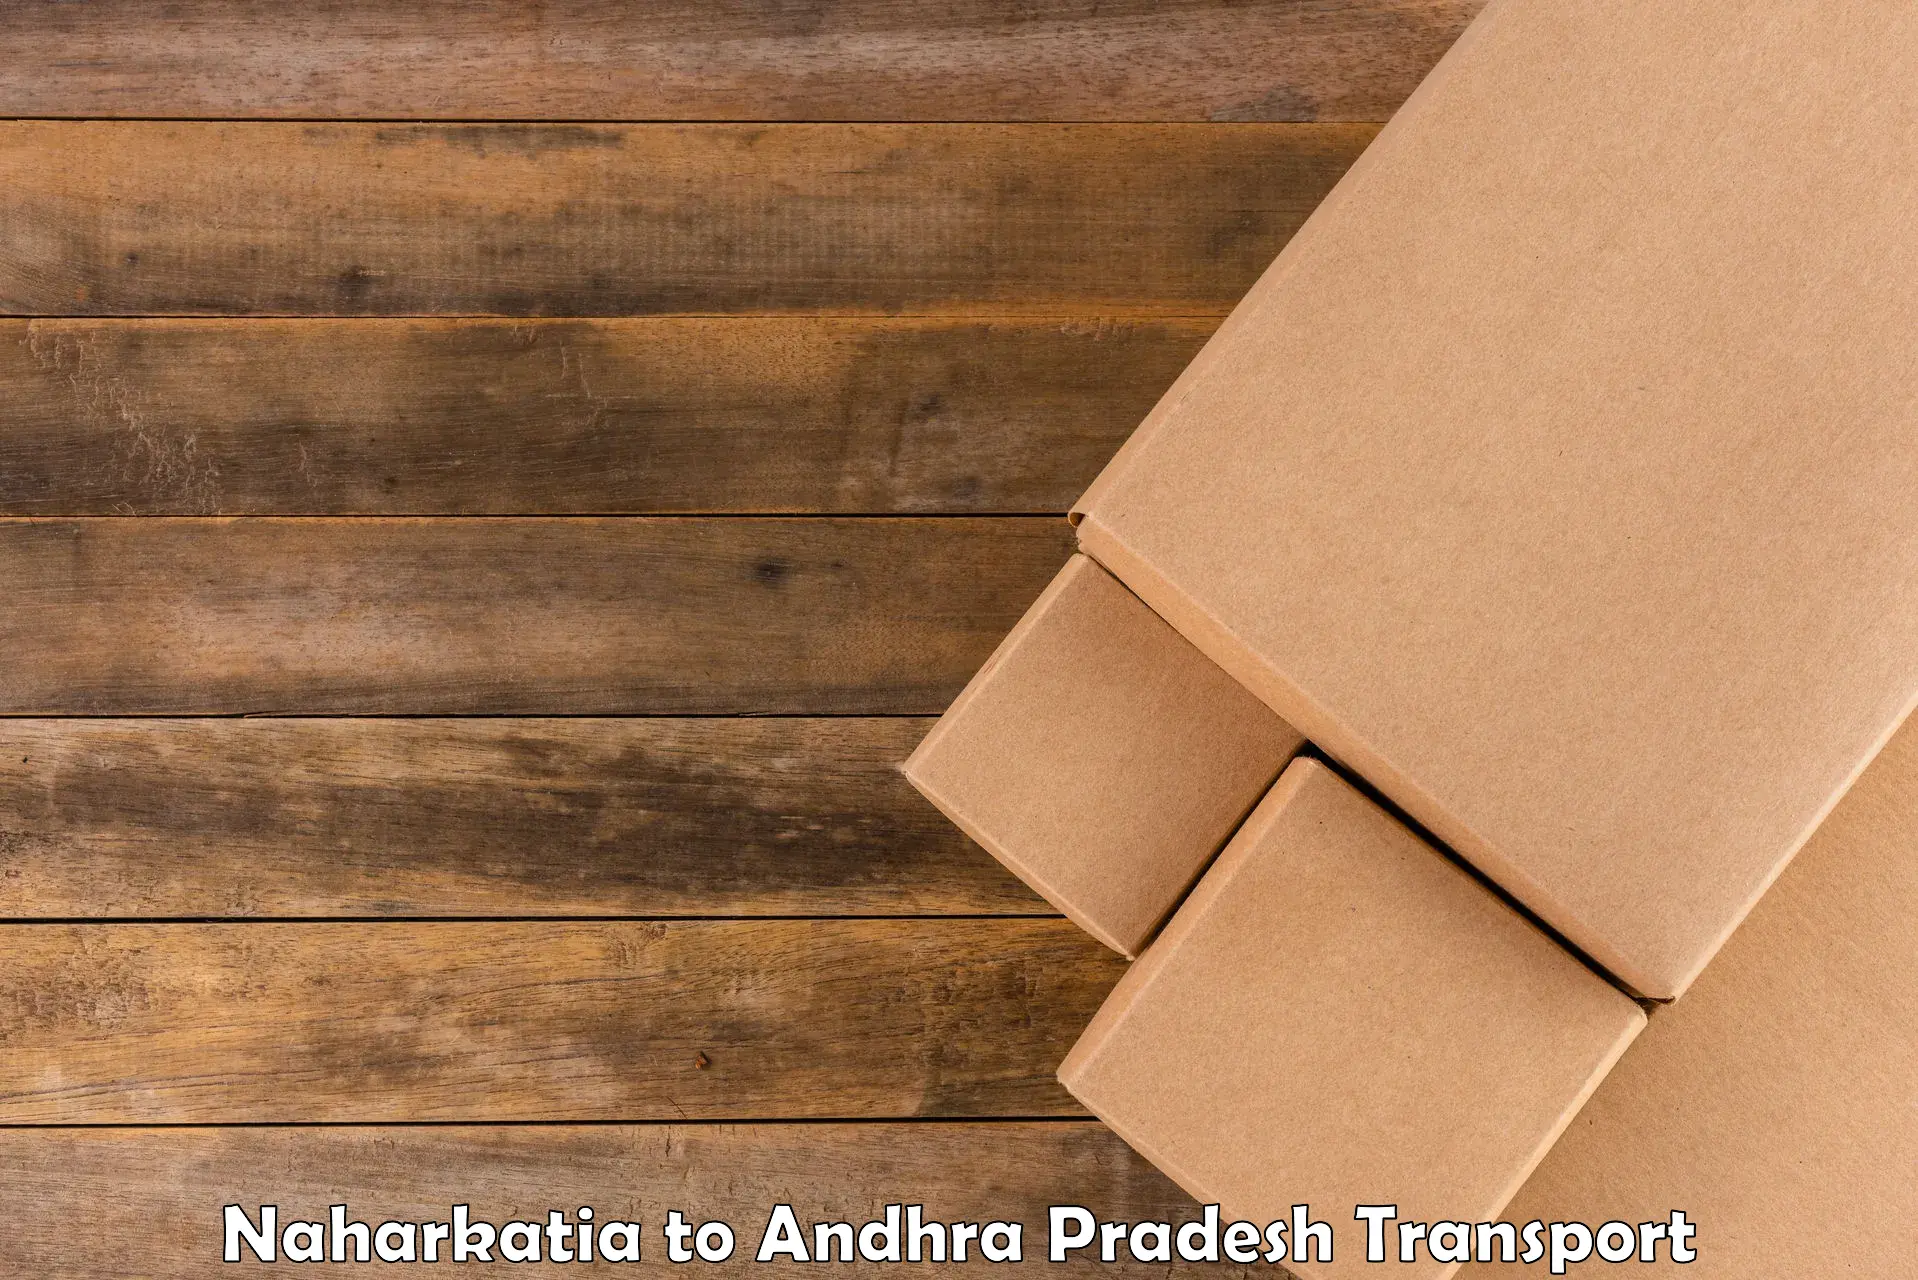 Truck transport companies in India Naharkatia to Annavaram